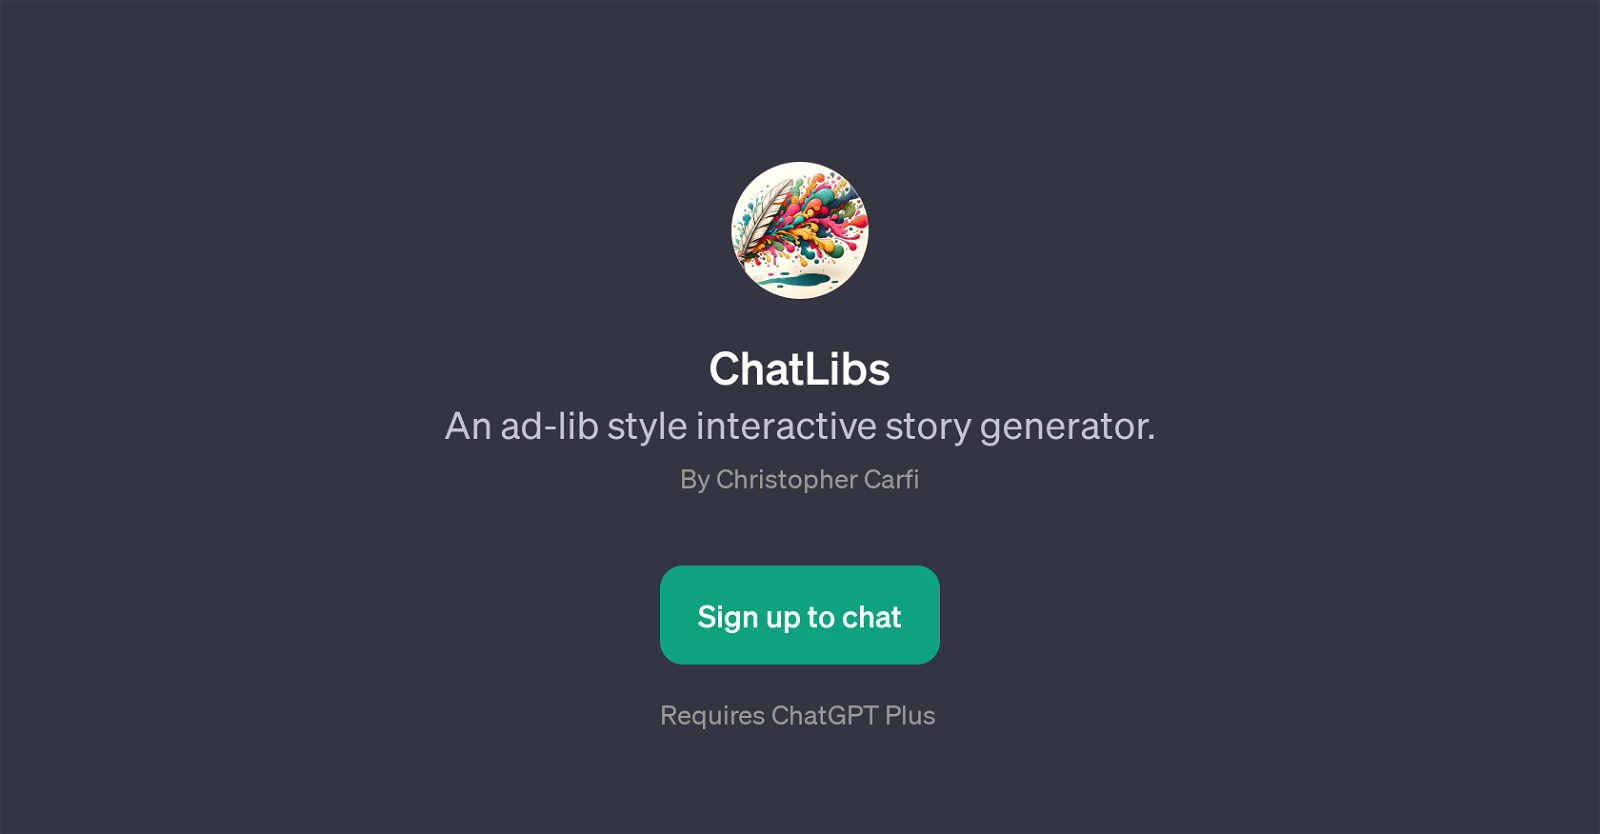 ChatLibs website